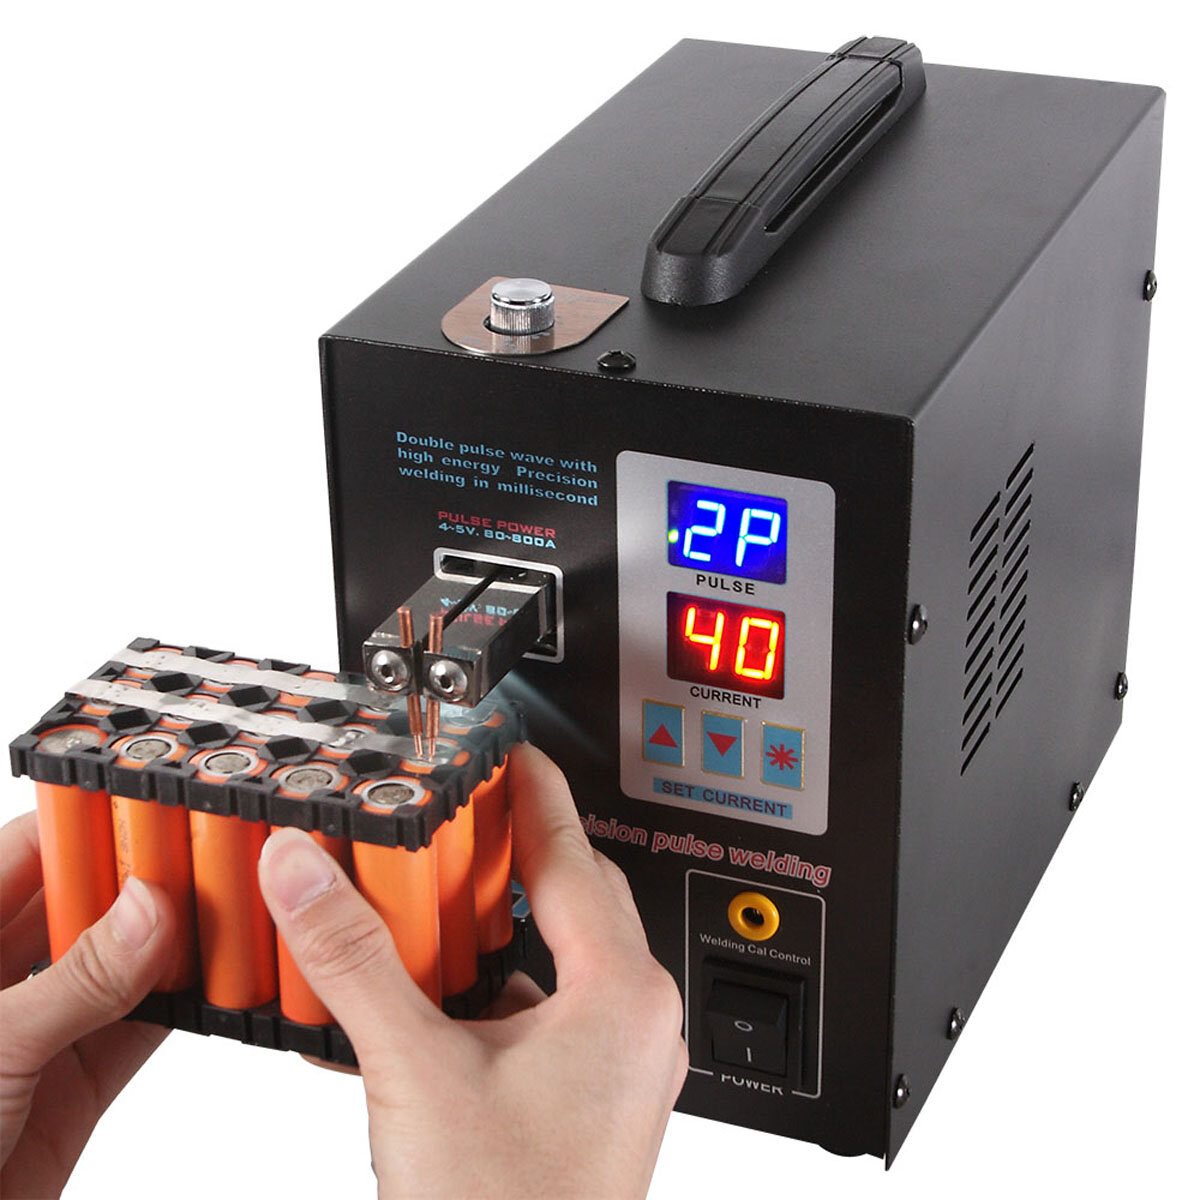 Sunkko 737g 220v Battery Spot Welder Hand Held Welding Machine With Pulse Current Display Sale Banggood Com